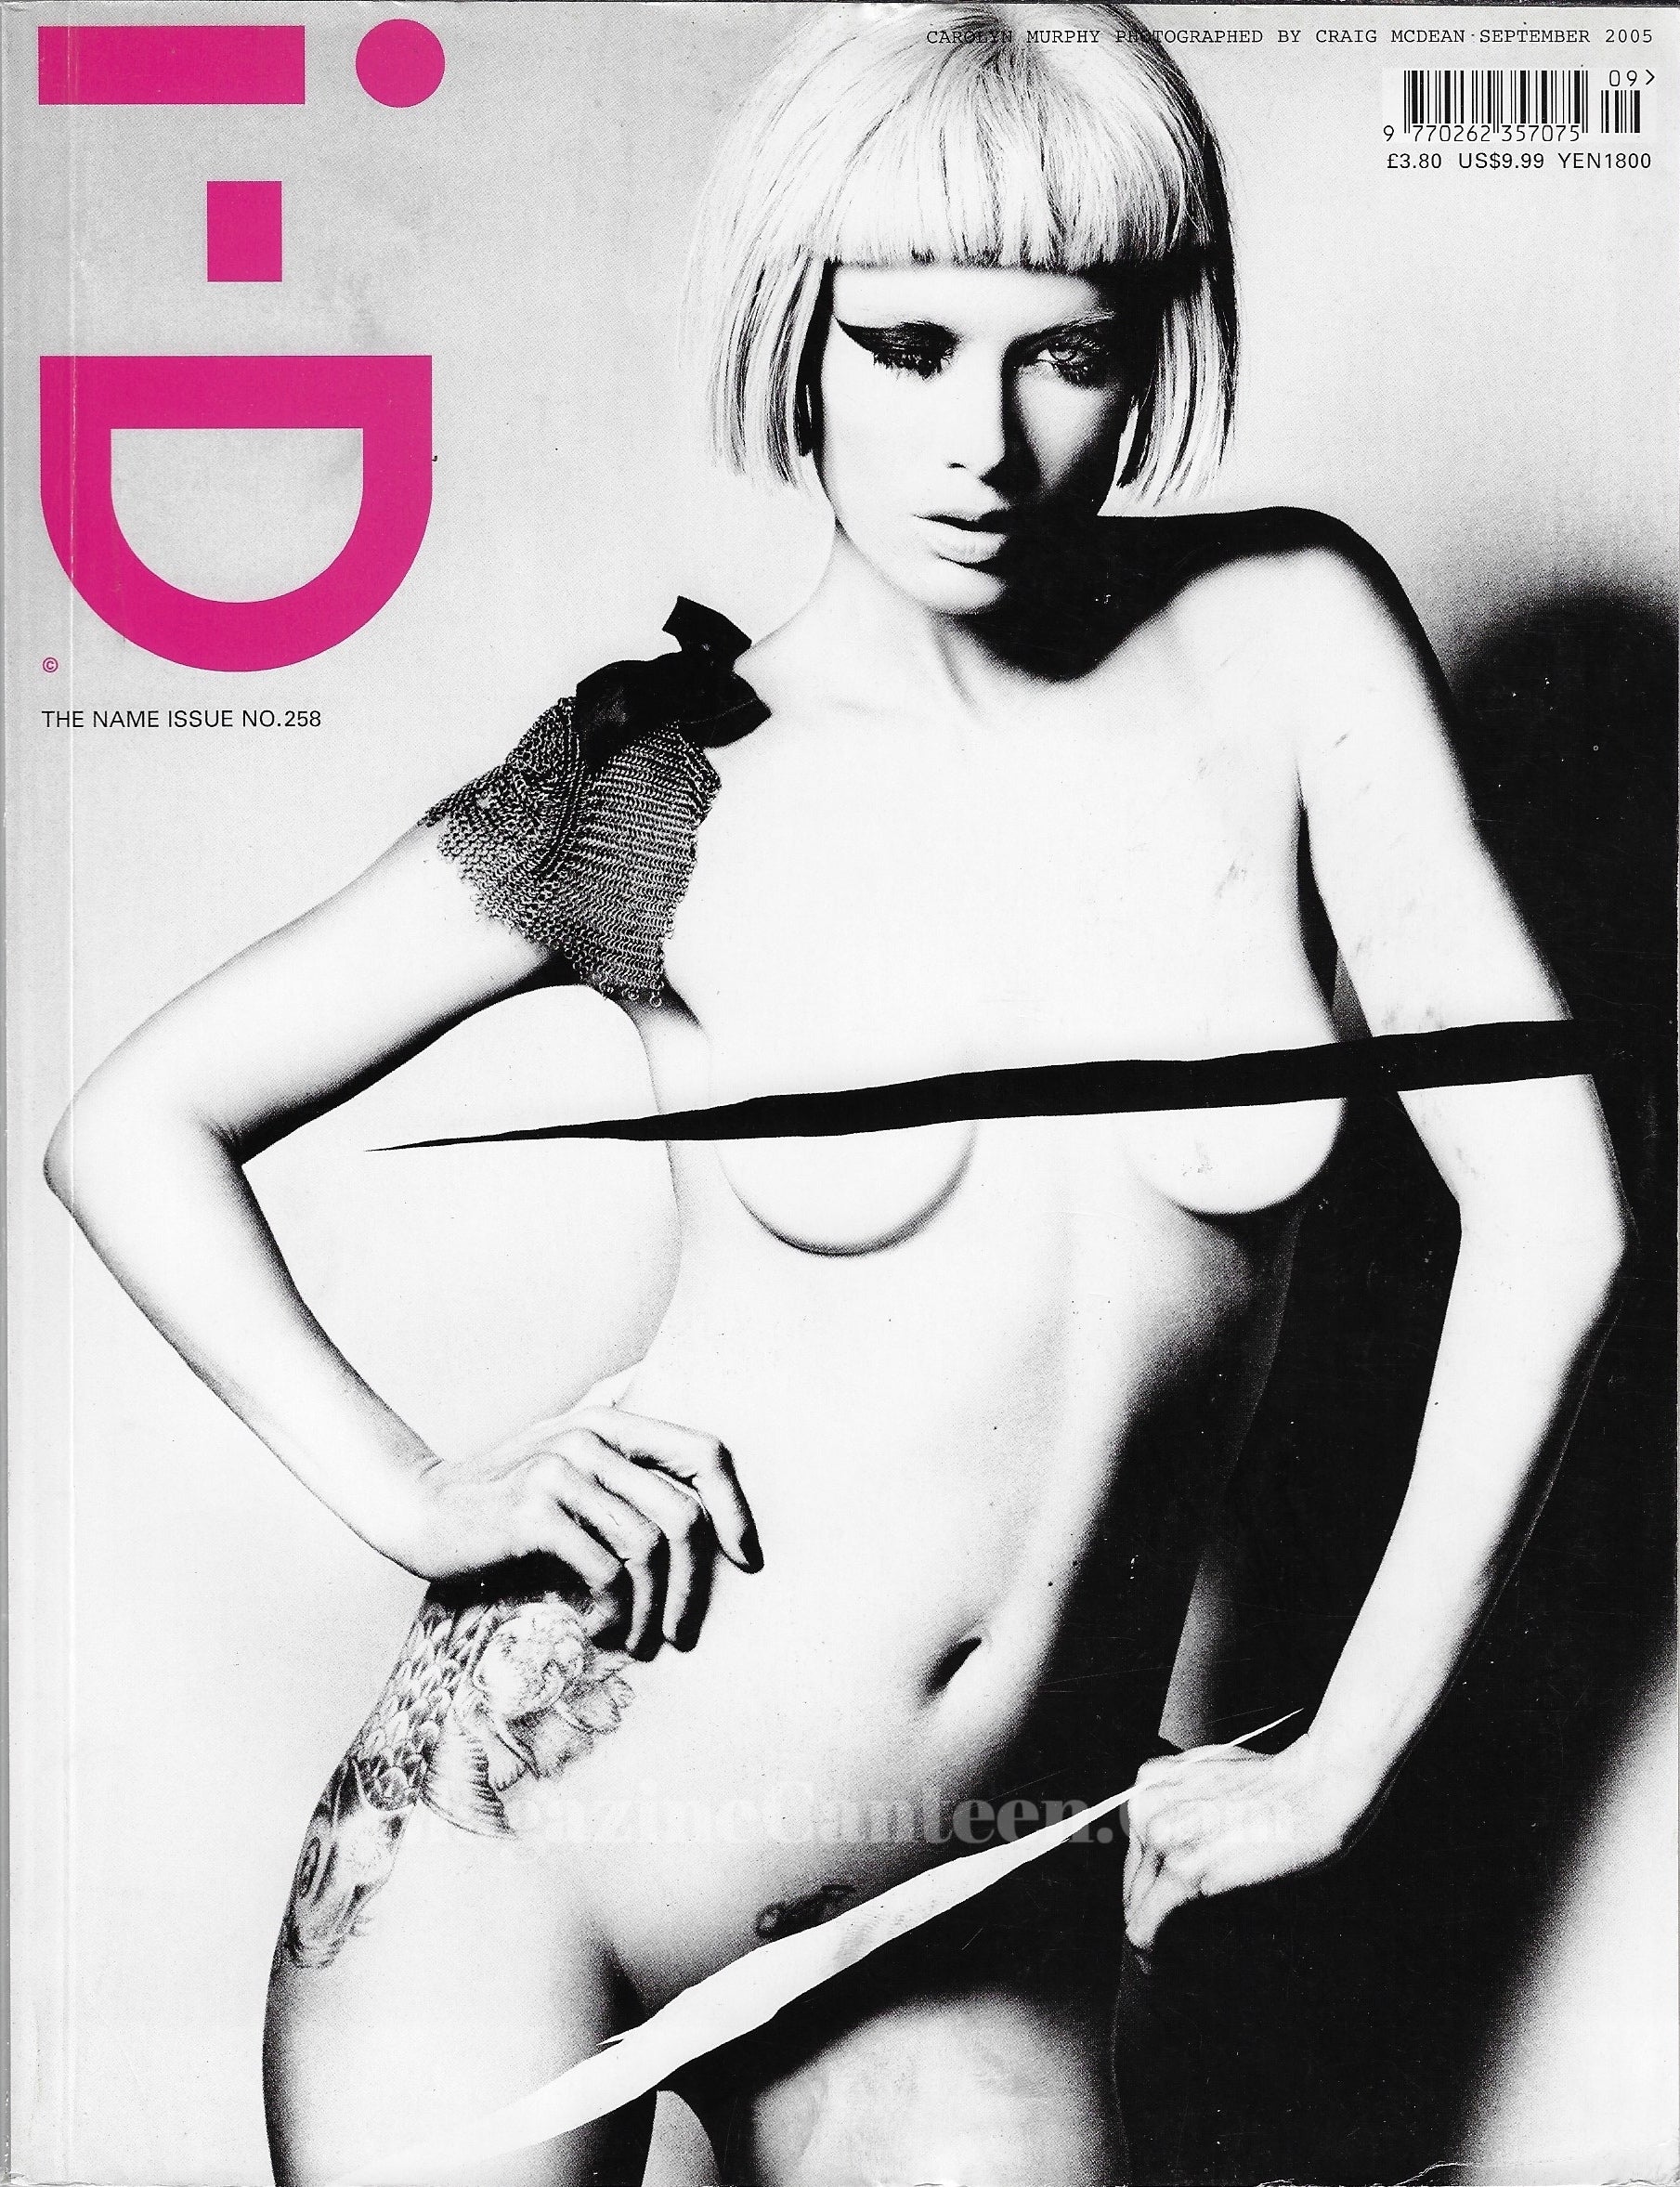 I-D Magazine 258 - Carolyn Murphy 2005